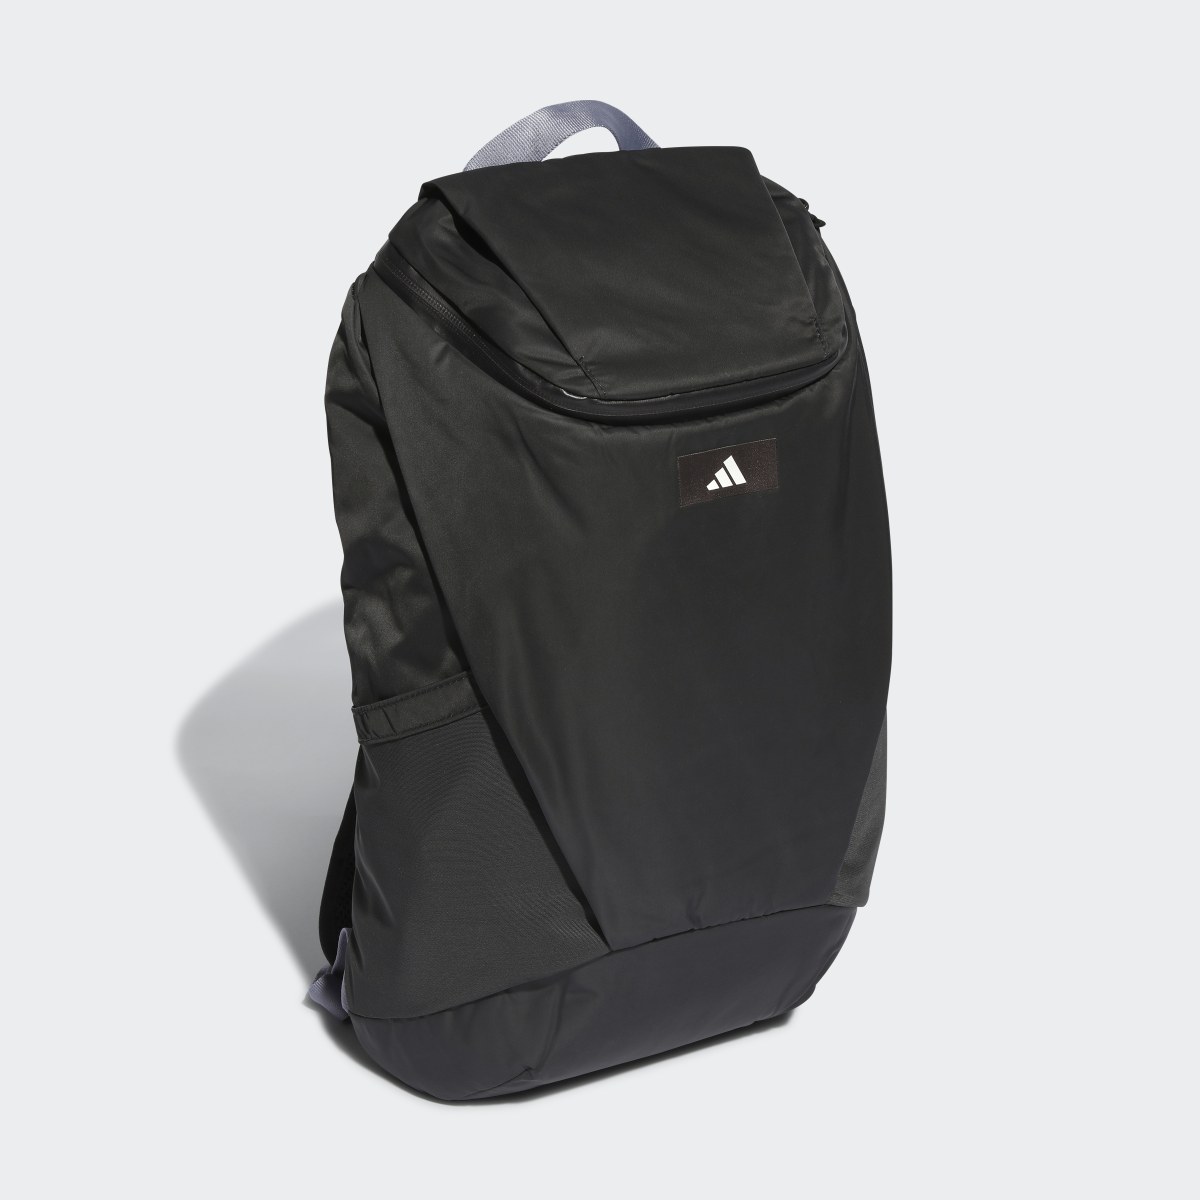 Adidas Designed for Training Gym Backpack. 4